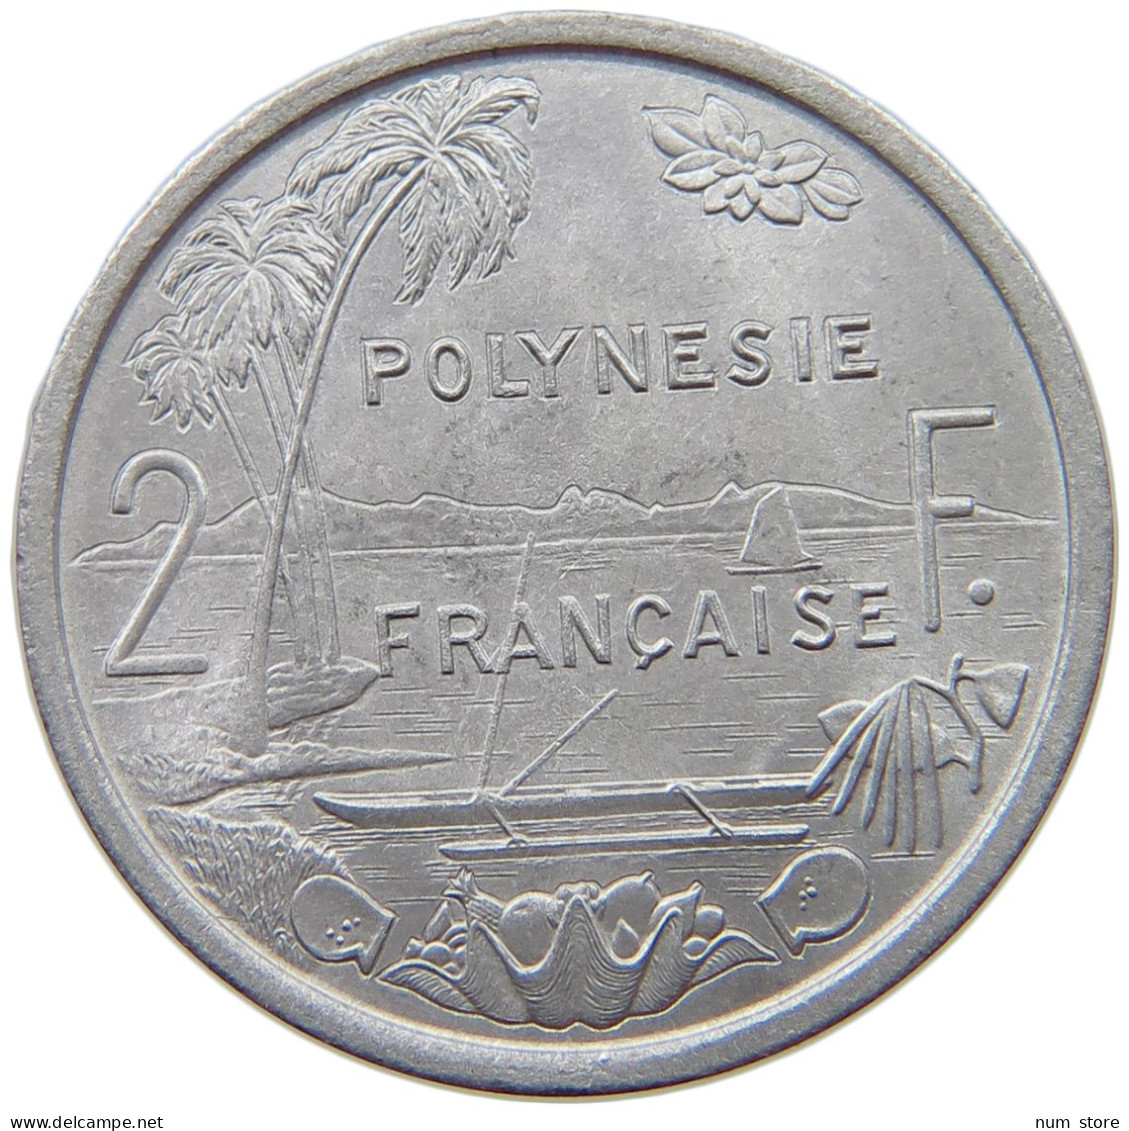 POLYNESIA 2 FRANCS 1973  #a022 0159 - Polinesia Francesa